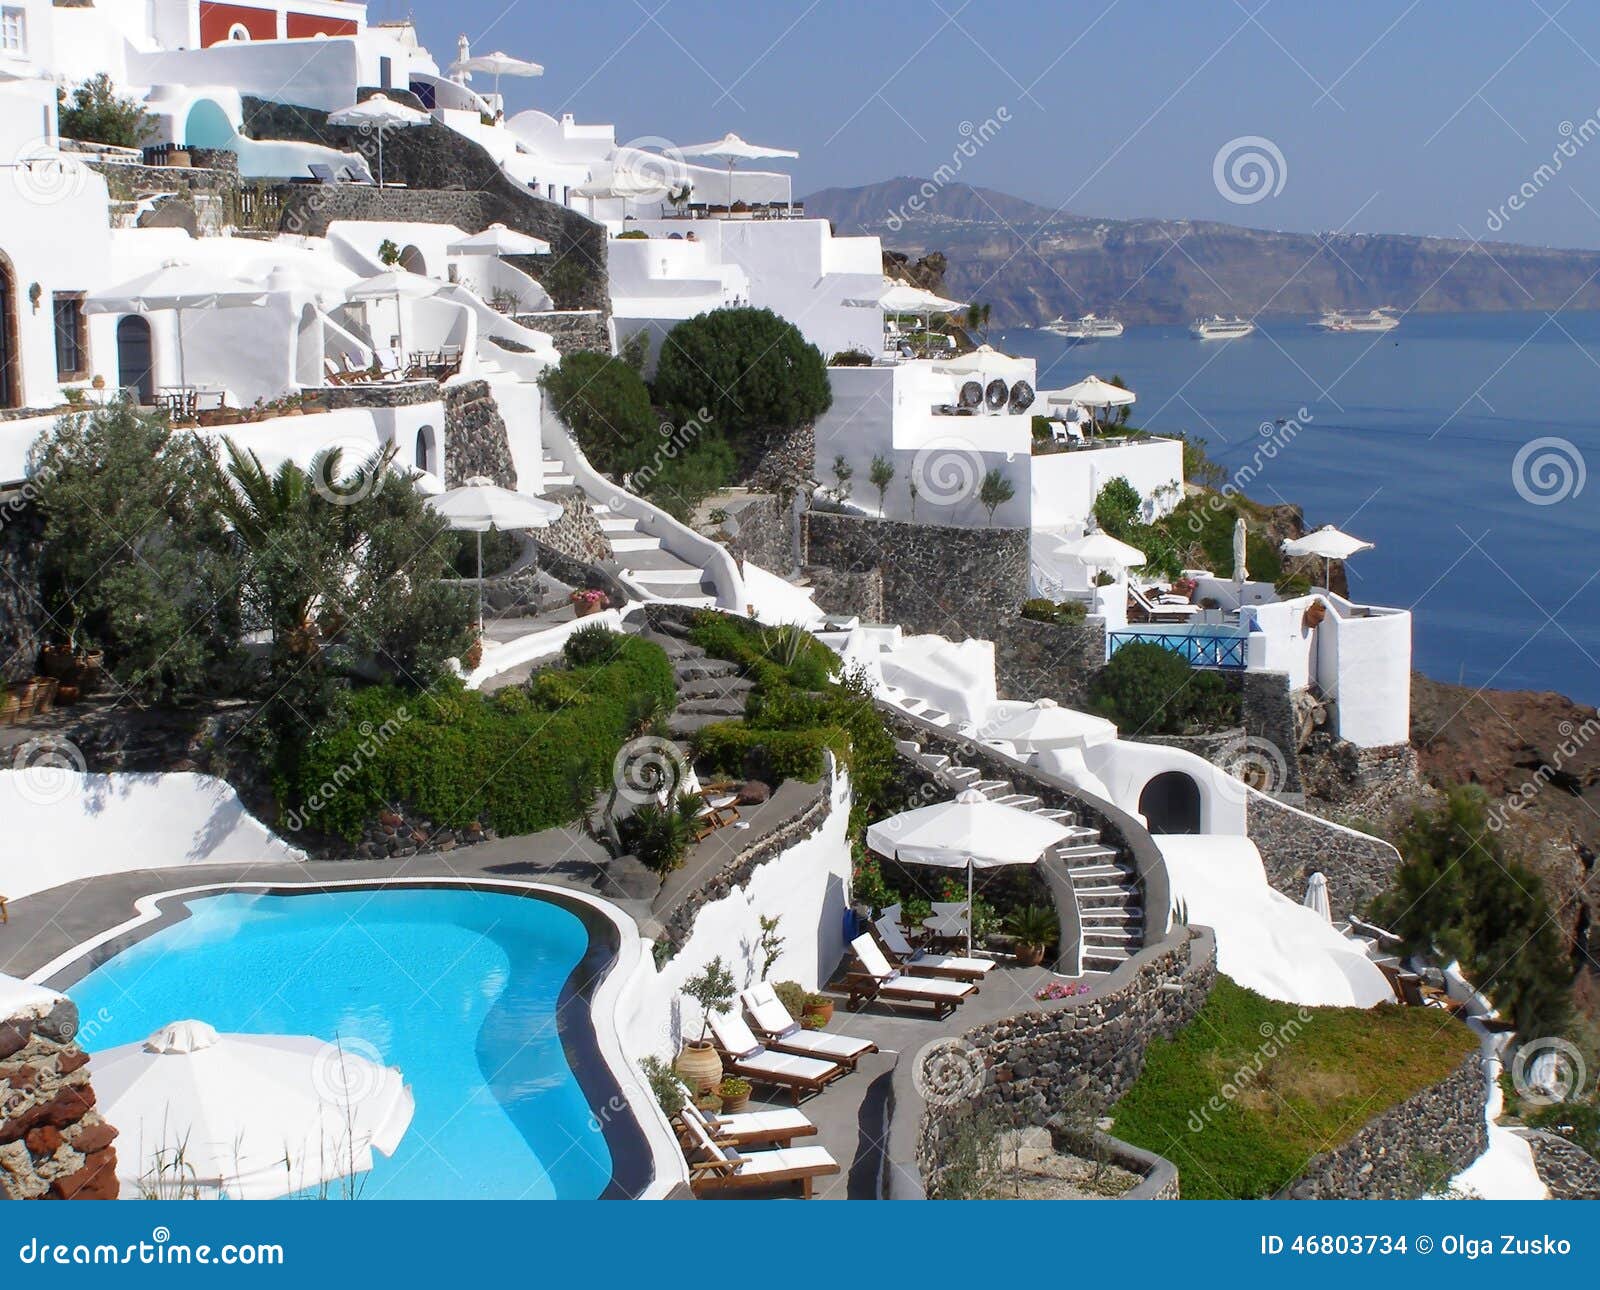 luxury holidays amazing greece beautiful landscape santorini island fira 46803734